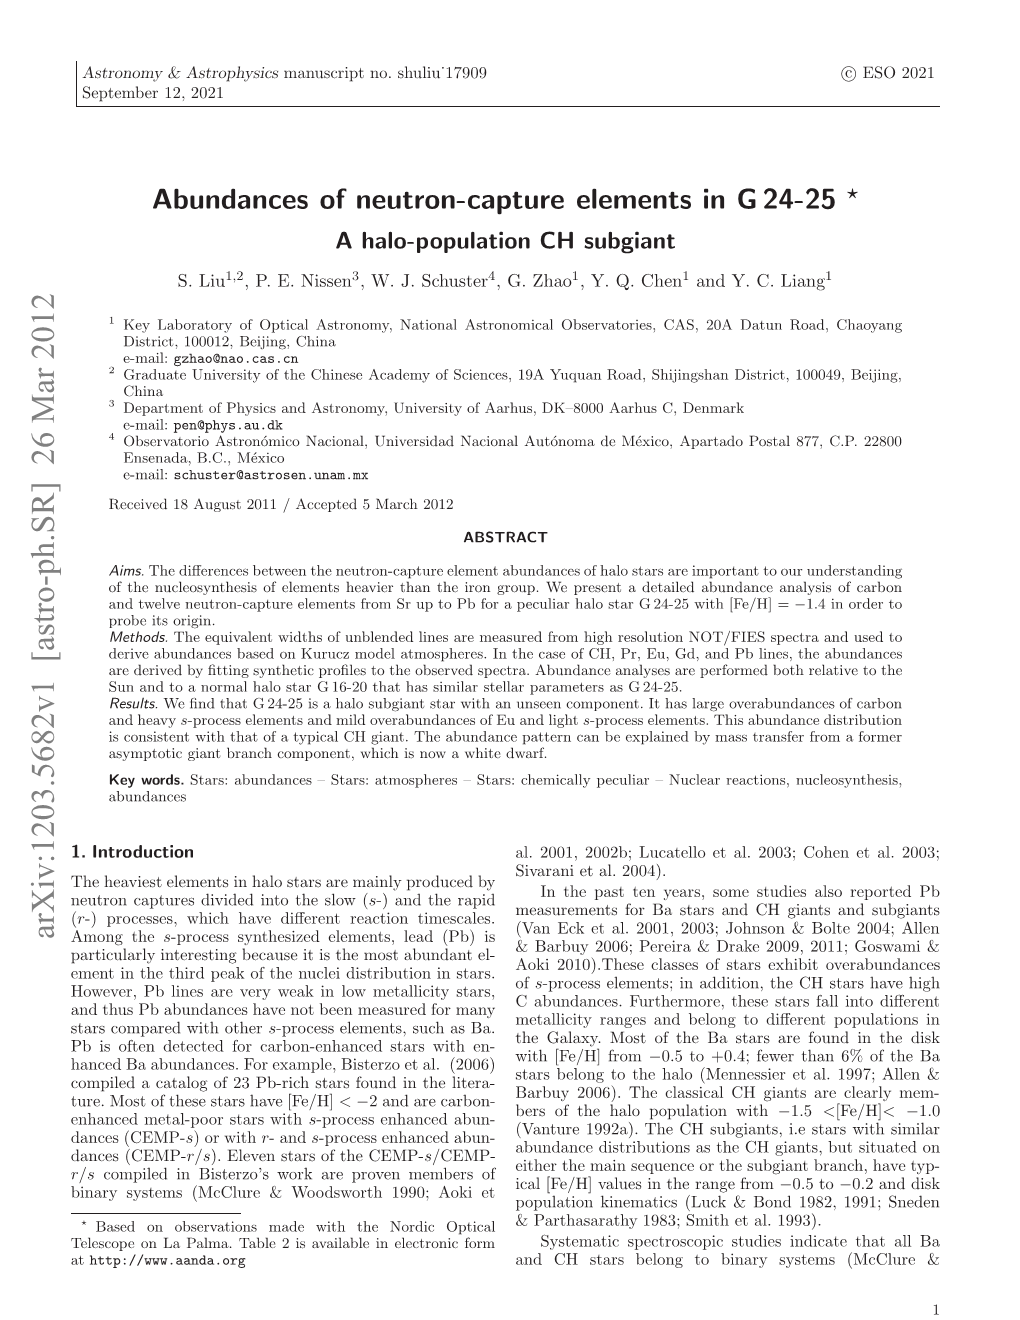 Abundances of Neutron-Capture Elements in G 24-25. a Halo